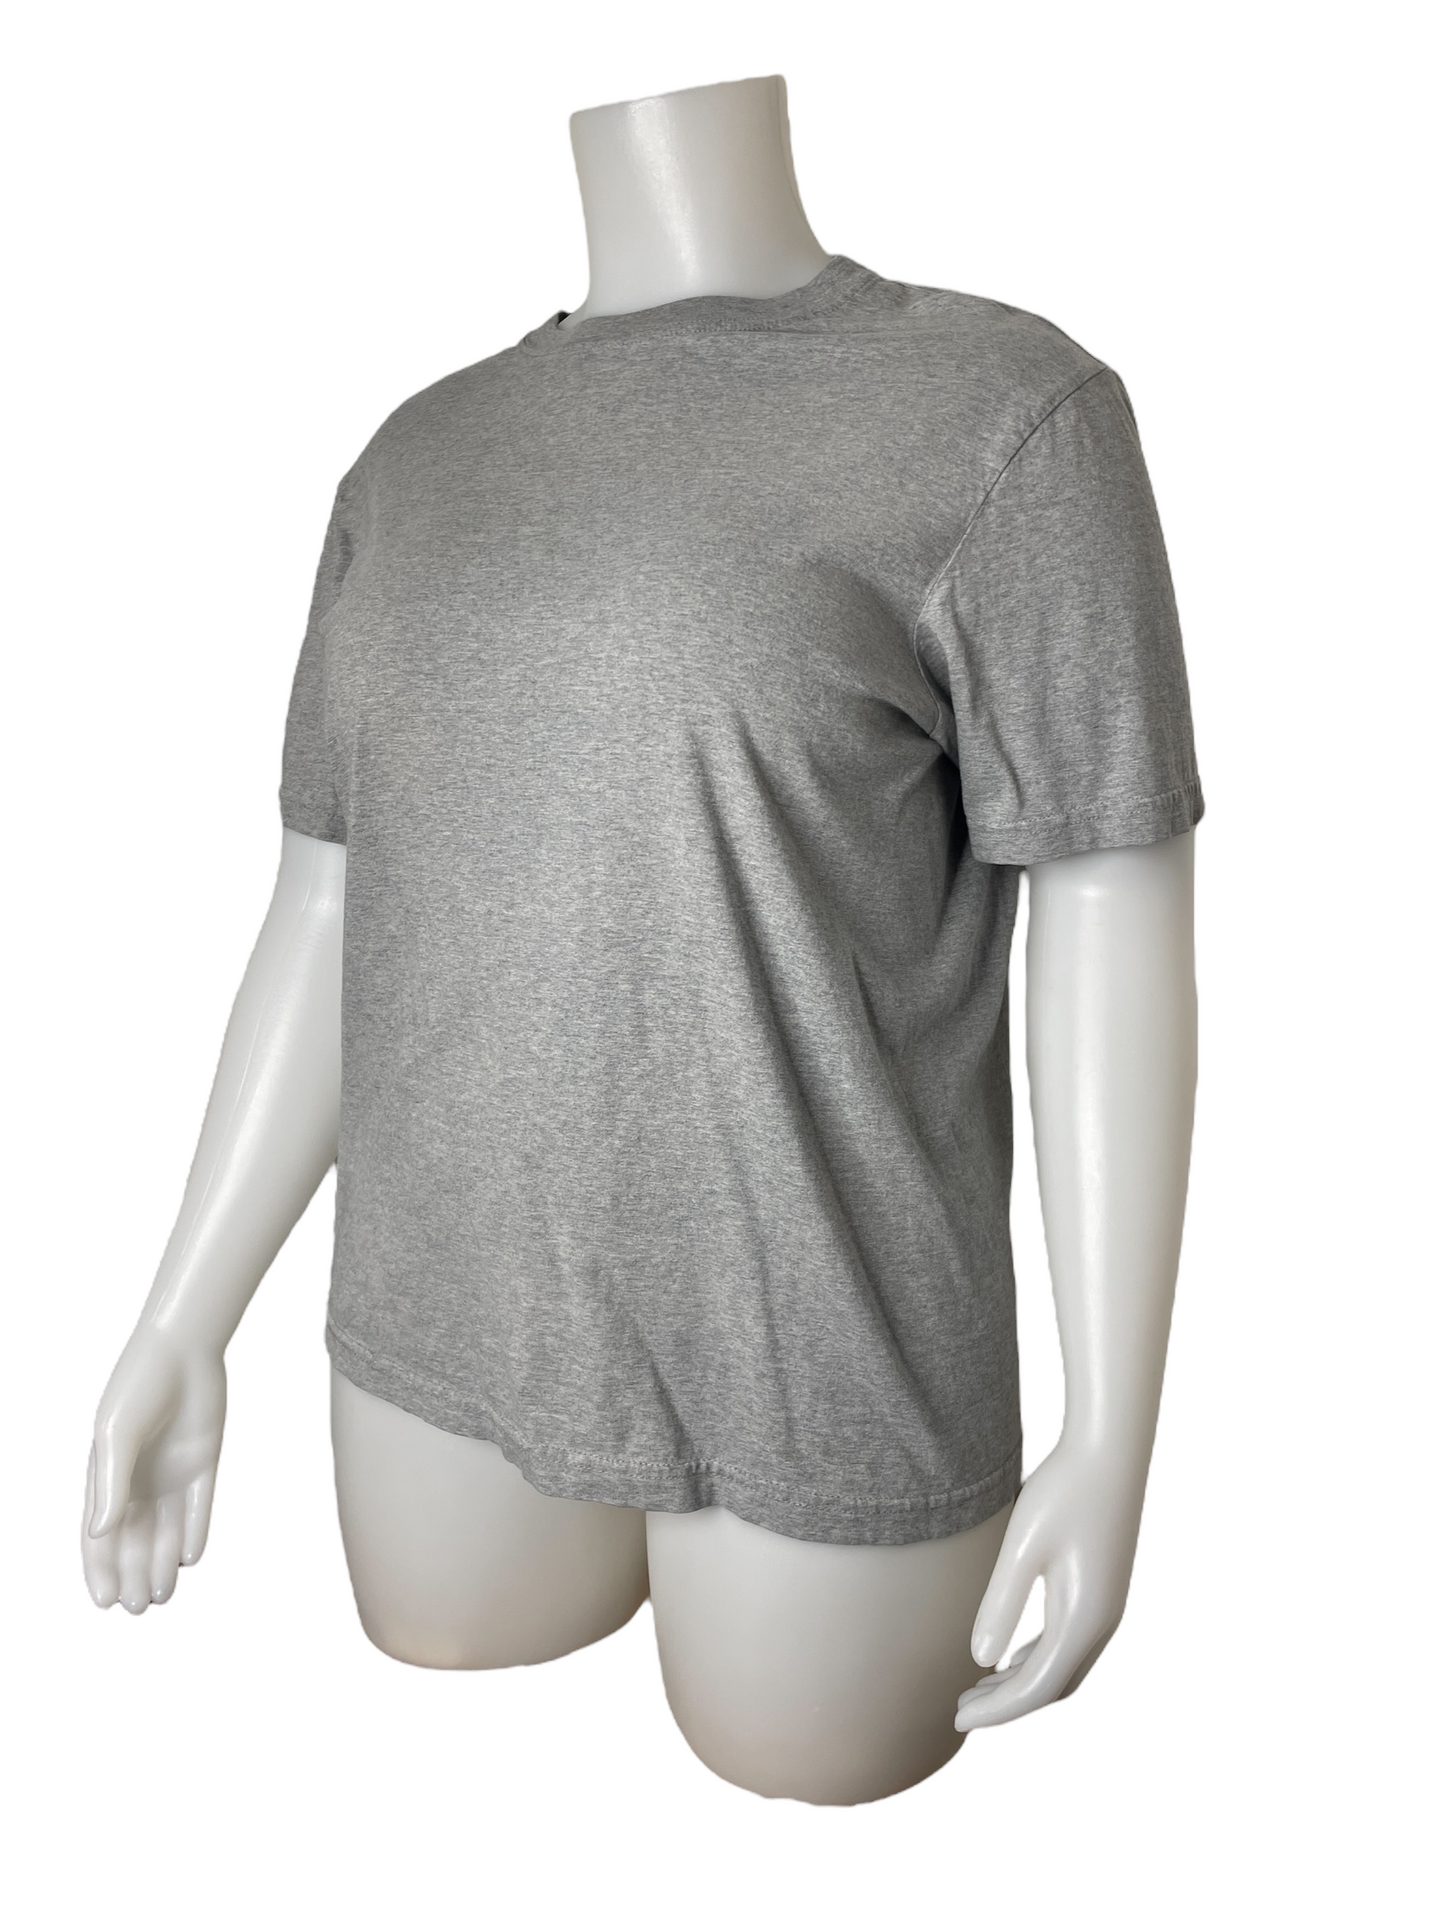 “Denver Hayes” Grey 100% Cotton T-Shirt (L)